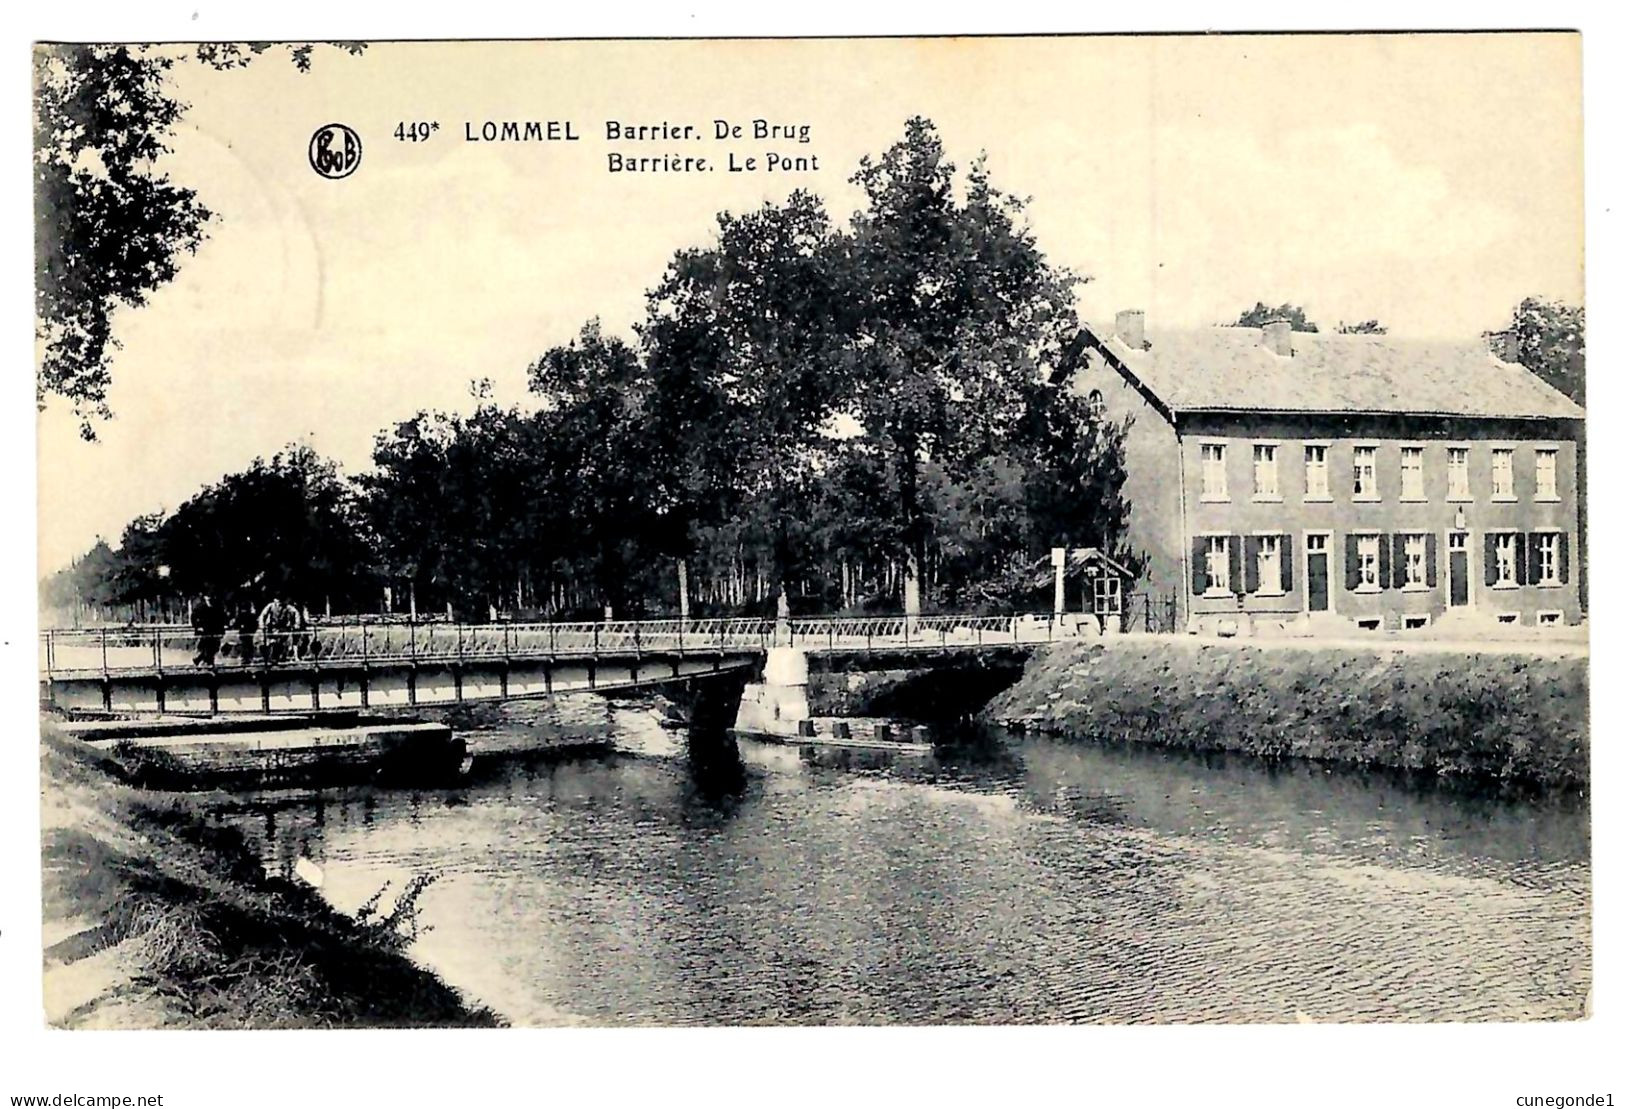 CPA P.K. LOMMEL : Barrier / Barrière De Brug / Le Pont Bob 449* - Gelopen - Drukk Van Leemput Lommel - 2 Scans - Lommel